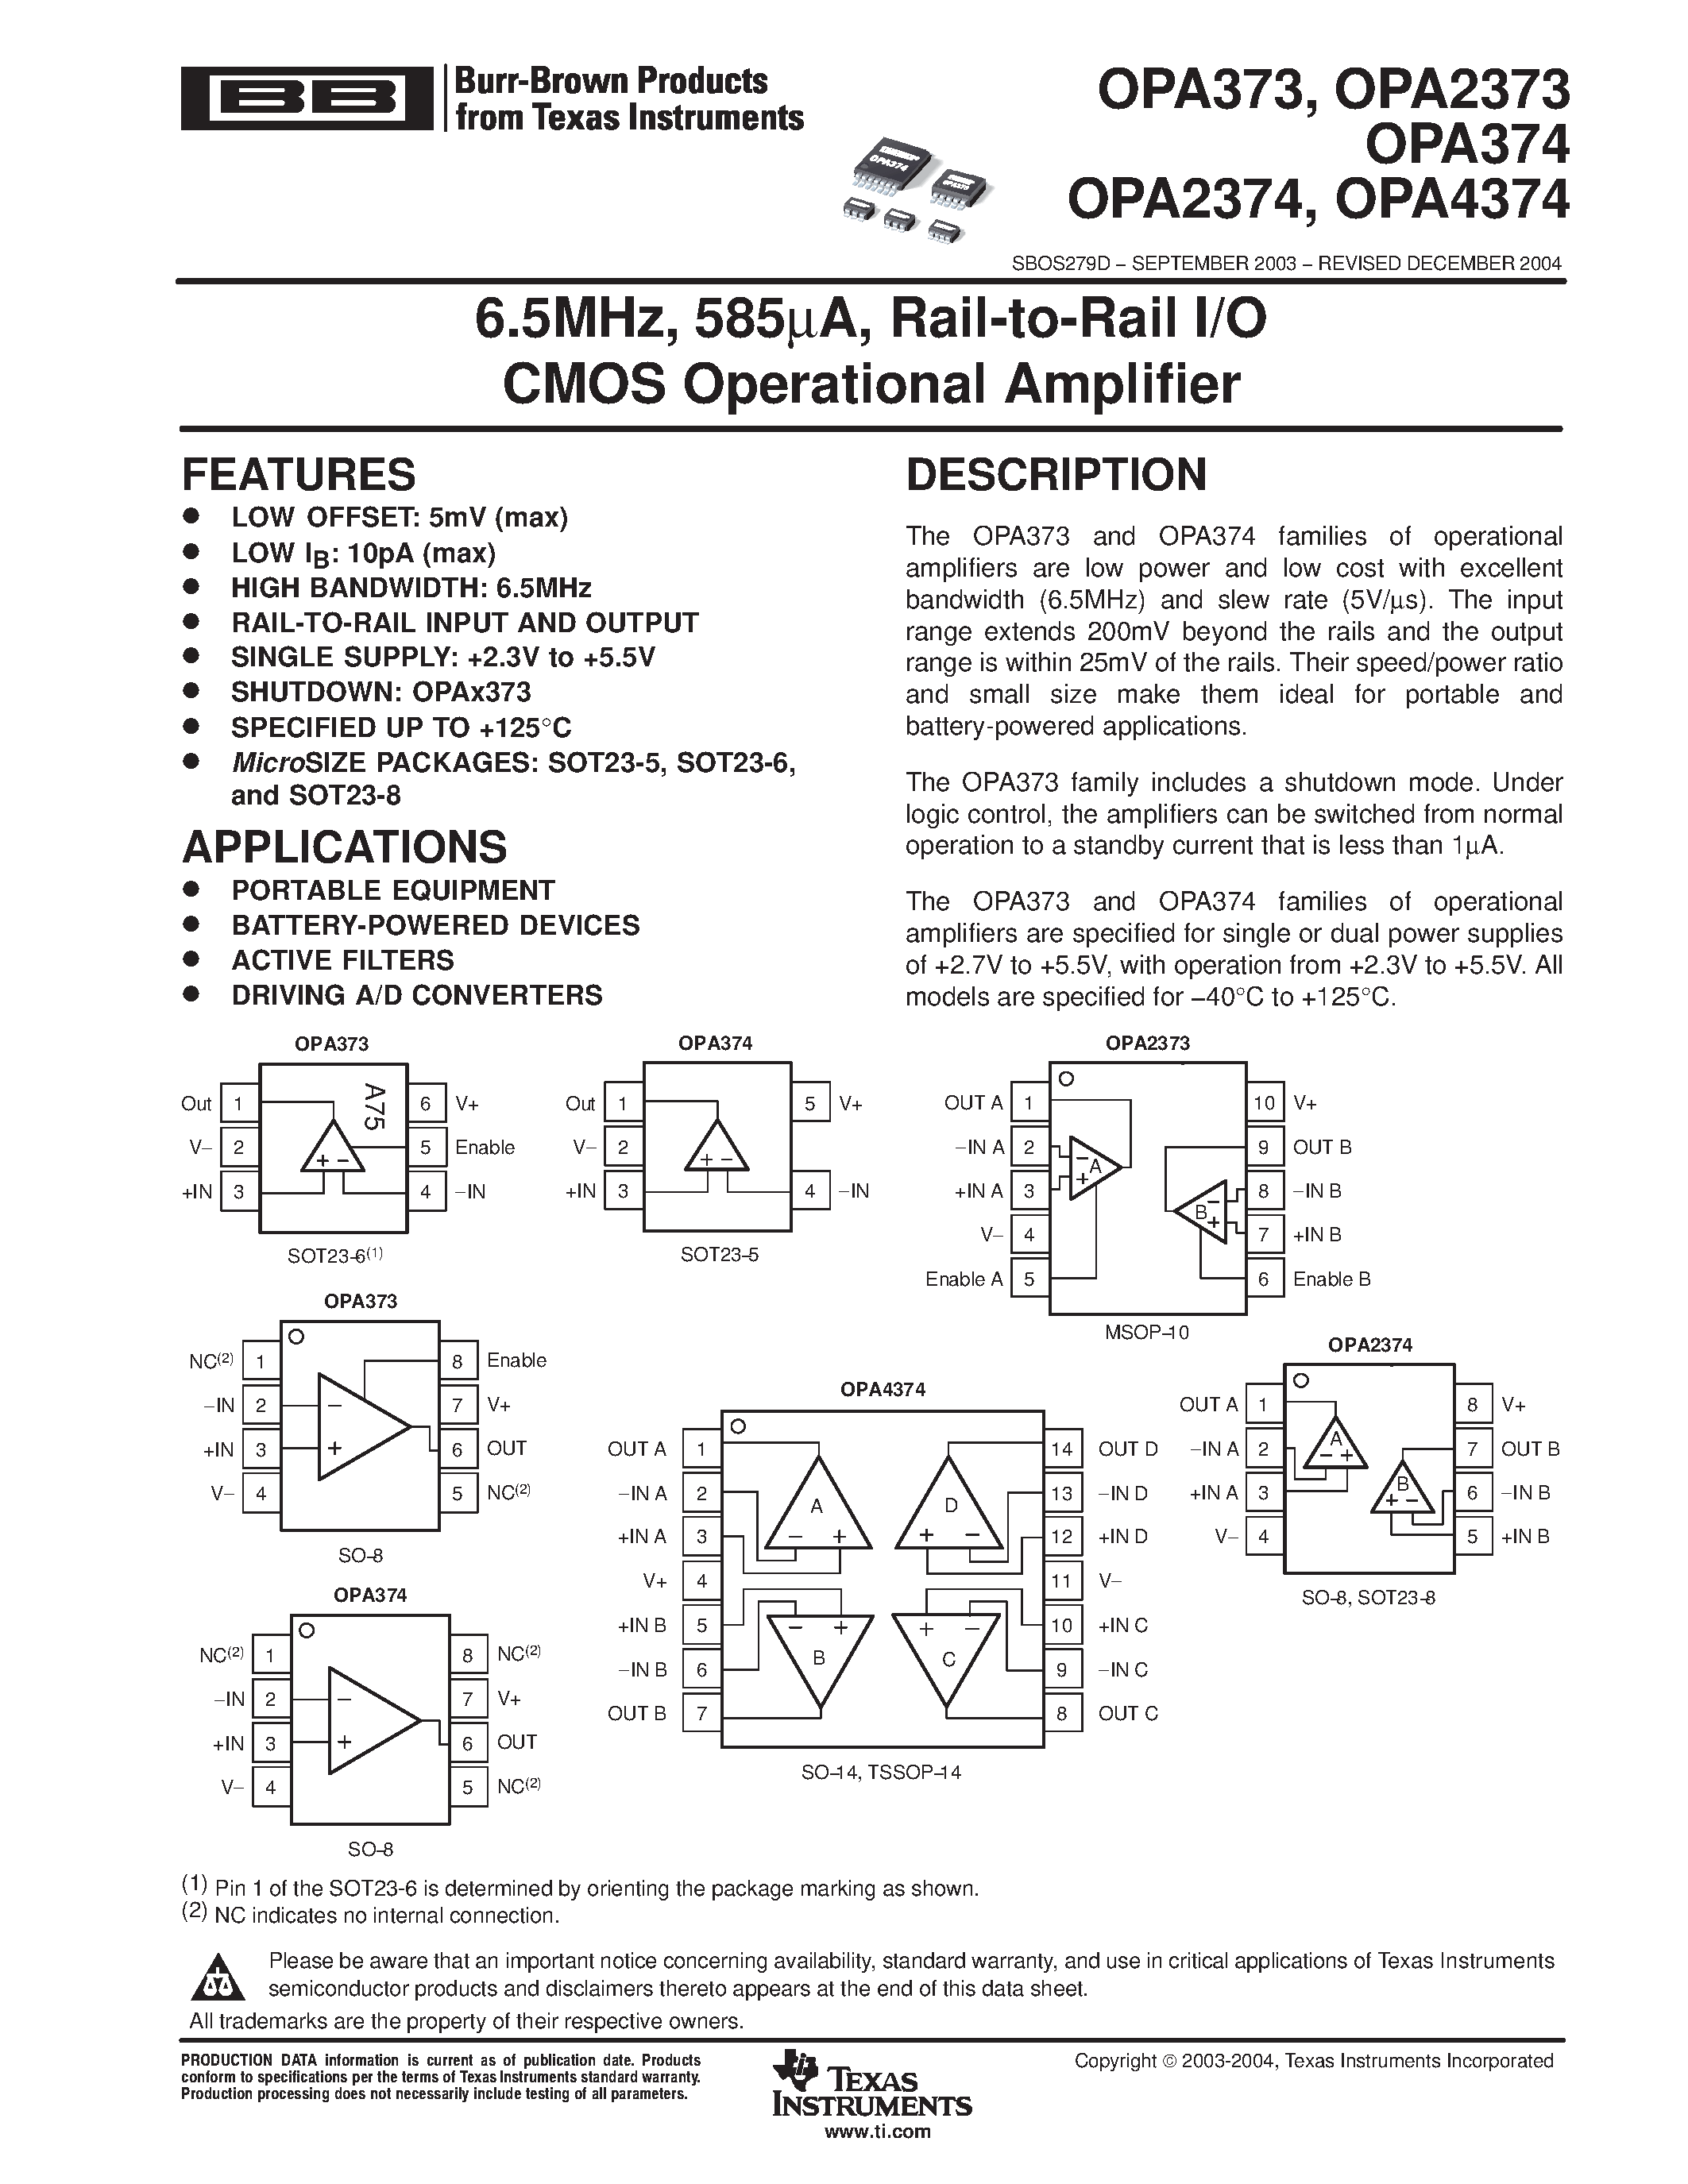 Datasheet OPA4374 - 6.5MHz / 585UA / Rail-to-Rail I/O CMOS Operational Amplifier page 1